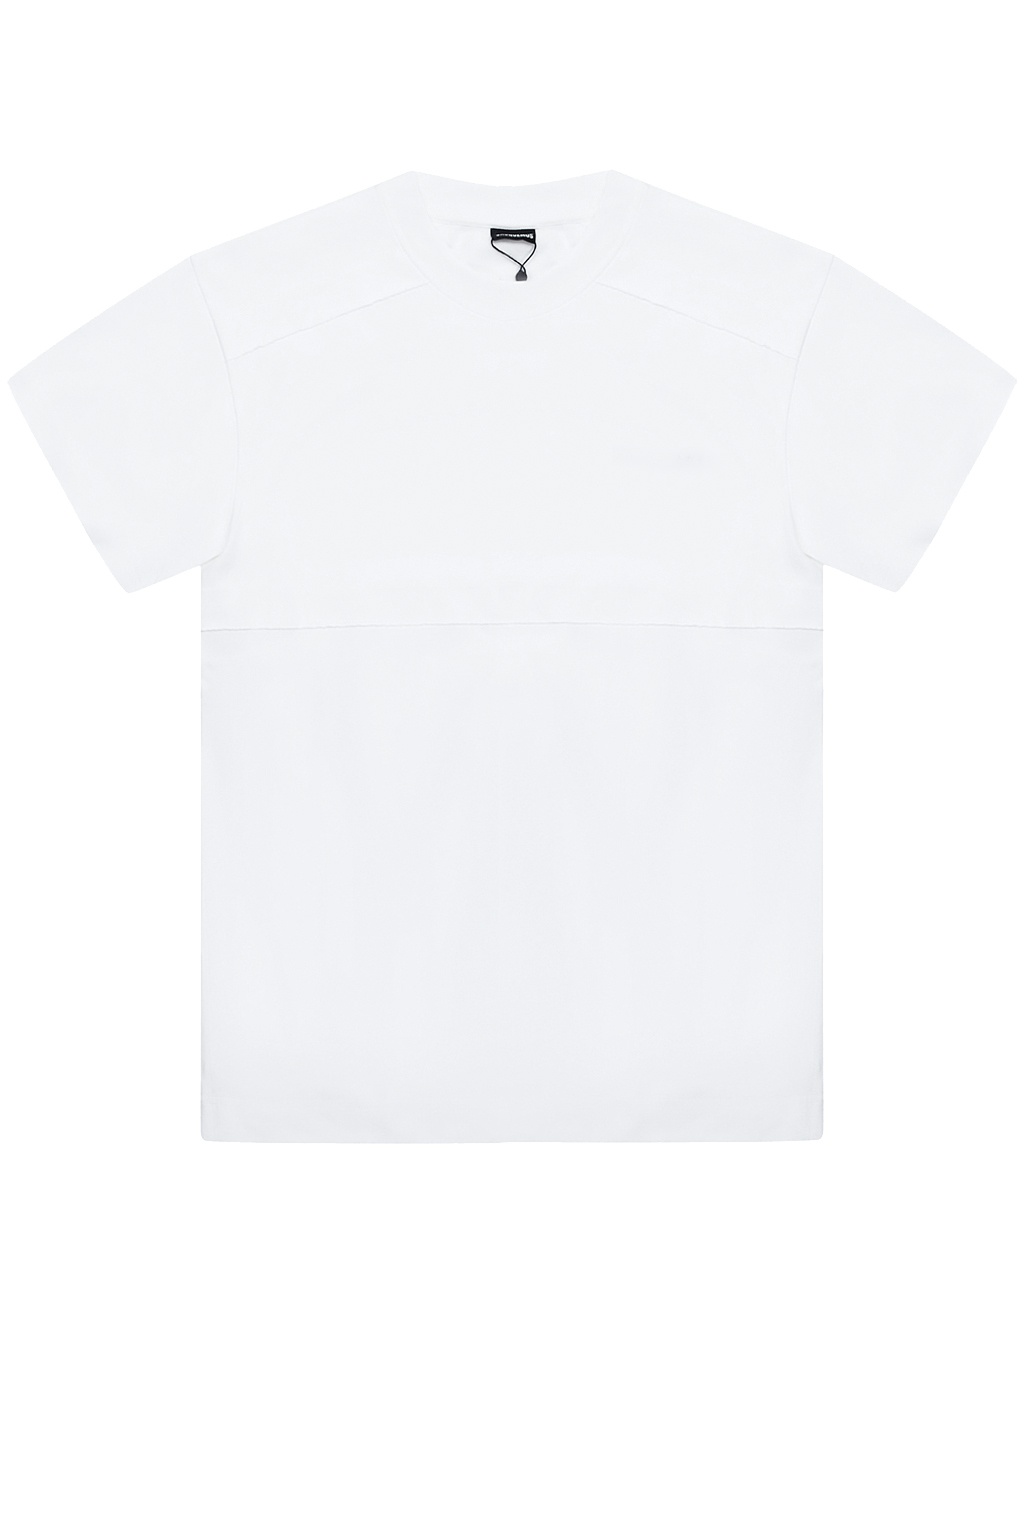 White ‘Jacquemus’ logo T-shirt Jacquemus - Vitkac GB